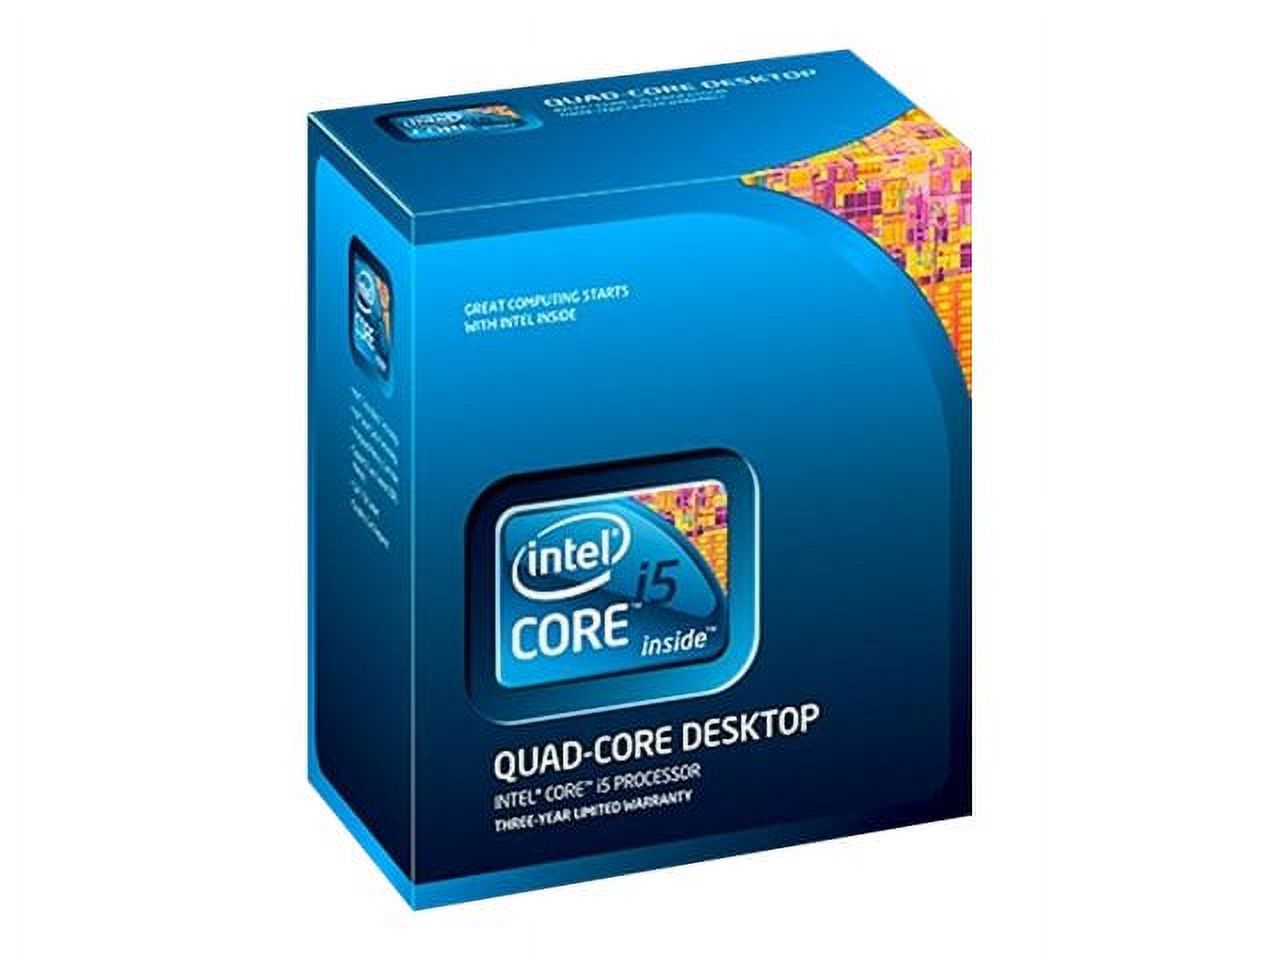 Intel Core i5 4670 - 3.4 GHz - 4 cores - 4 threads - 6 MB cache - LGA1150 Socket - Box - image 2 of 3